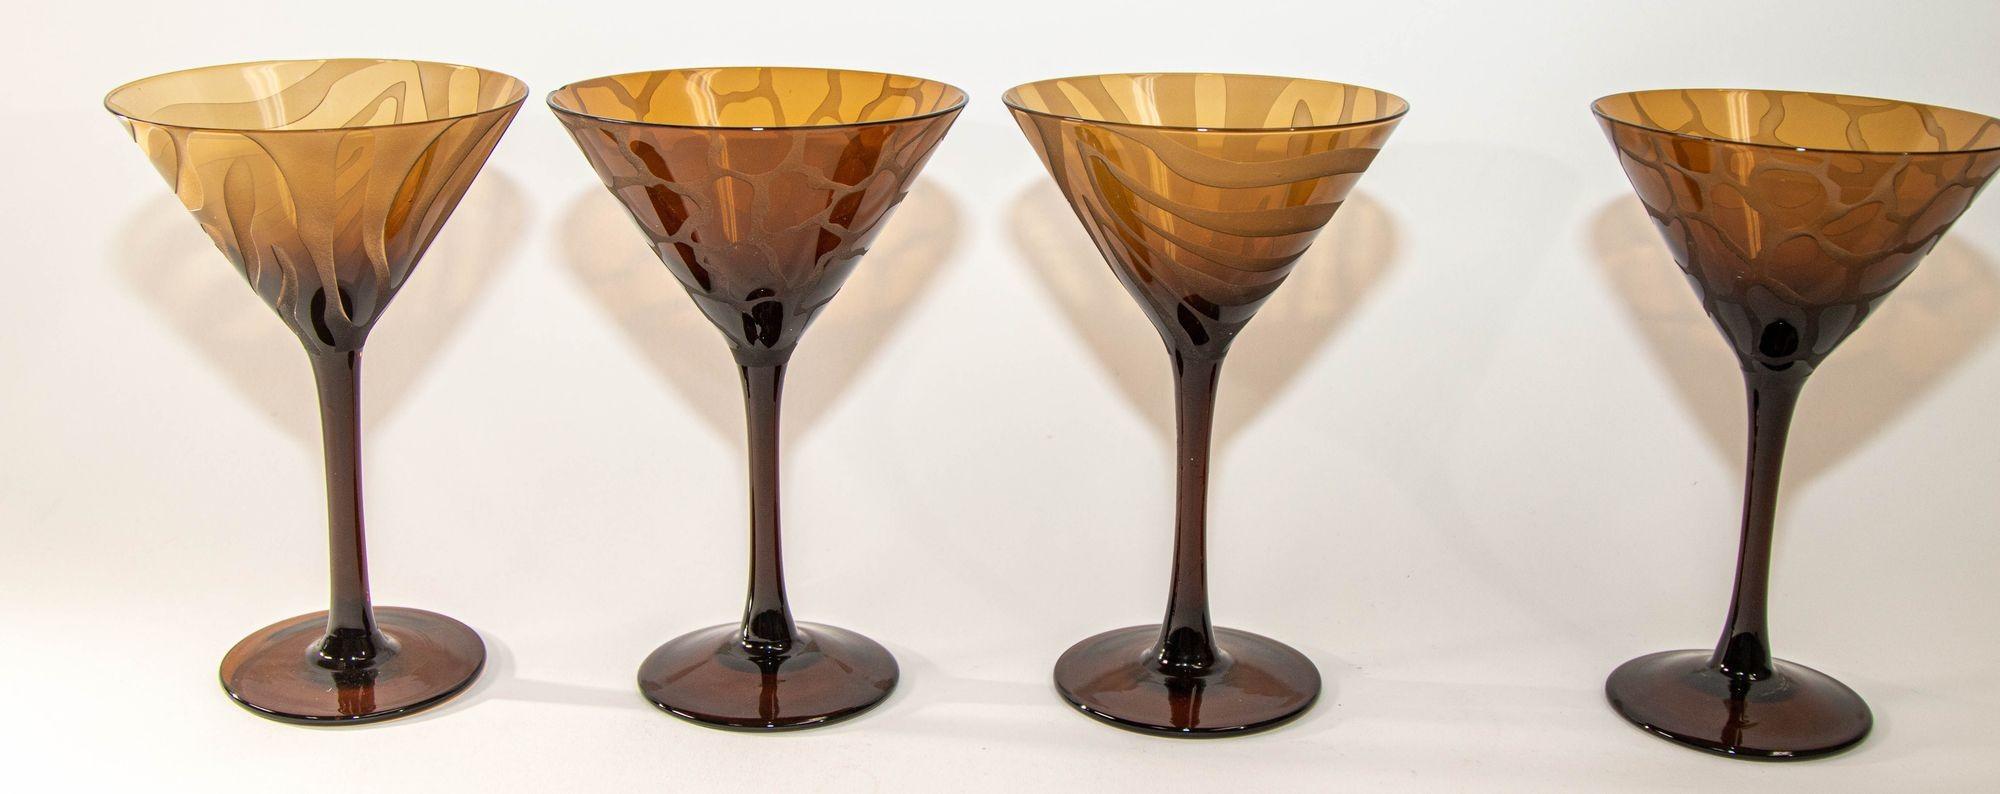 1990s Murano Martini Stemmed Glasses Vintage Etched Barware Set of 4 3